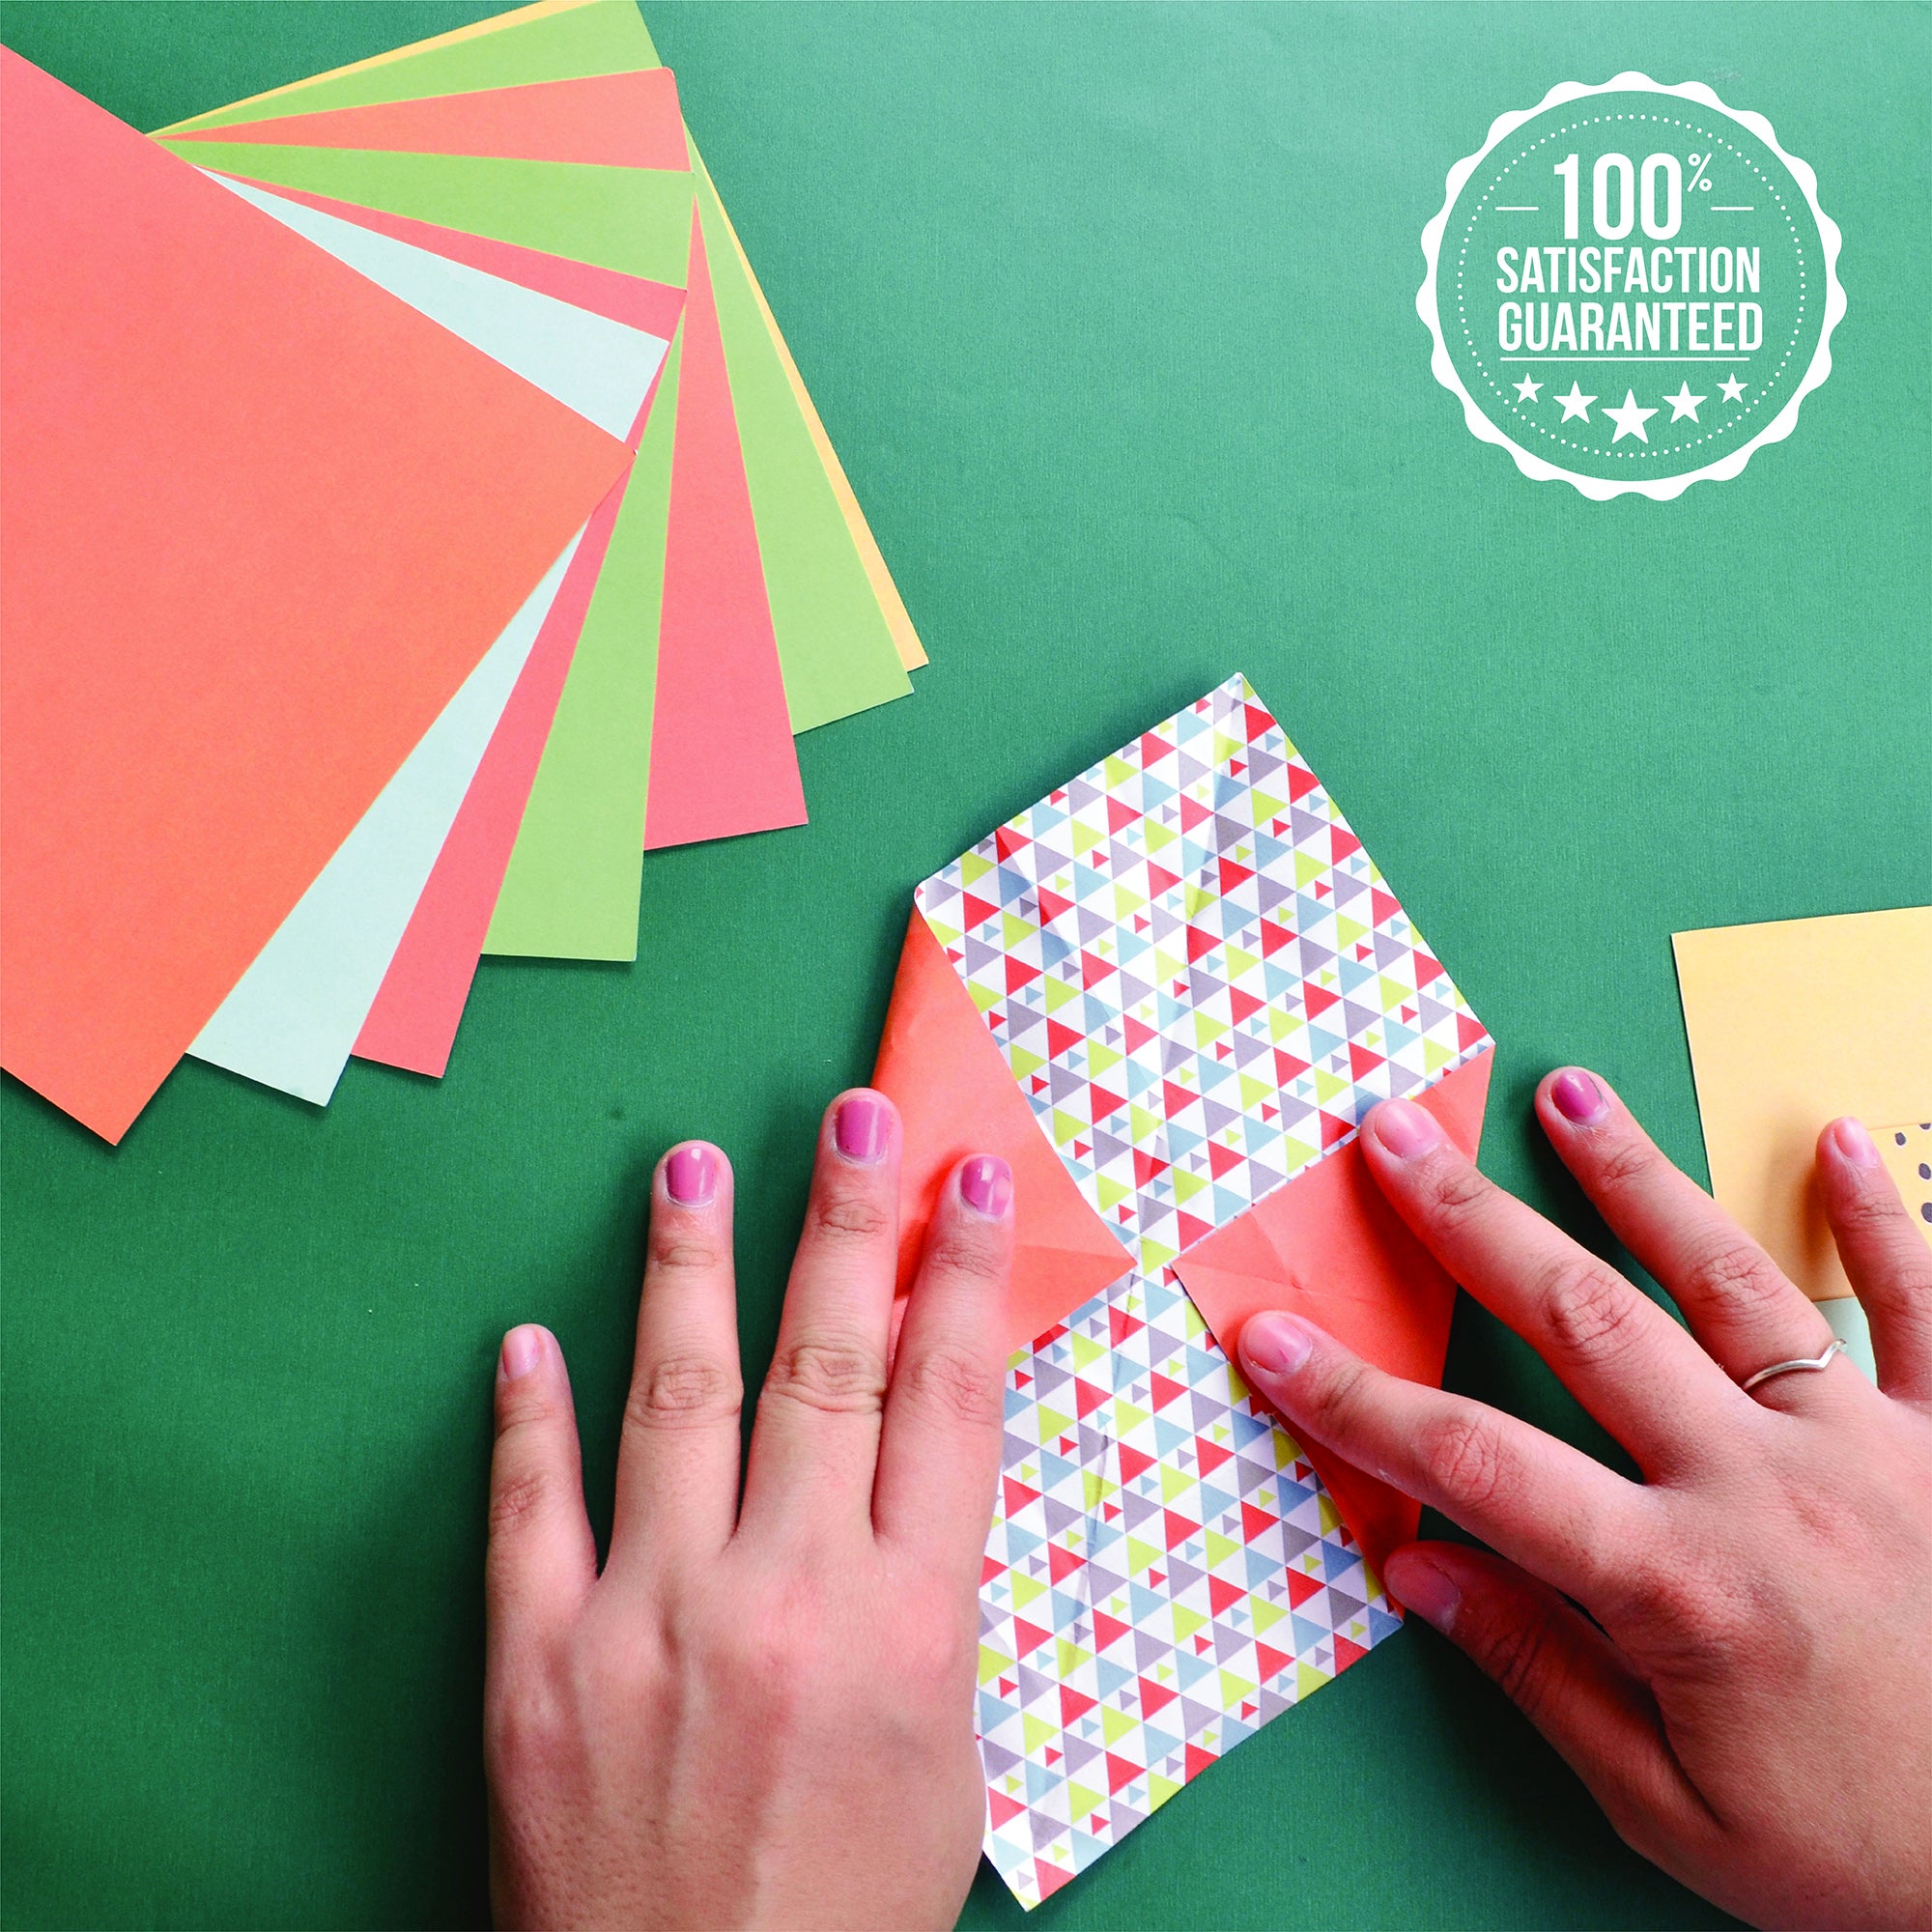  Yibeishu Origami Kit for Kids, 120 Sheets Origami